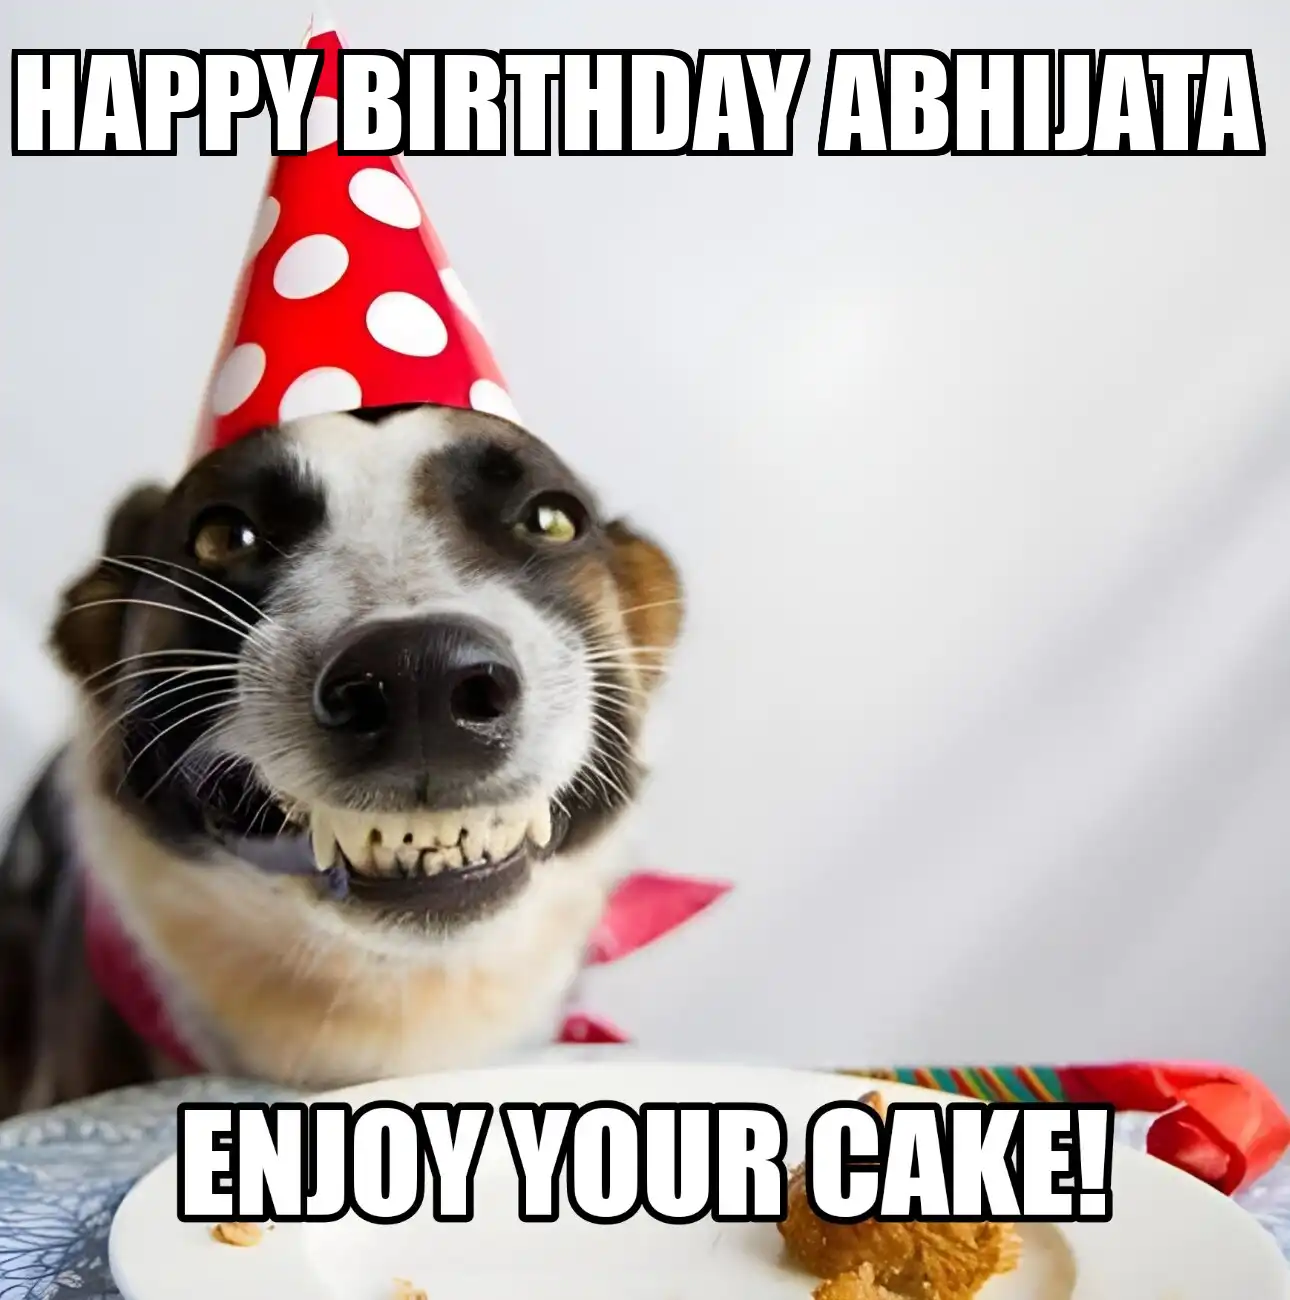 Happy Birthday Abhijata Enjoy Your Cake Dog Meme